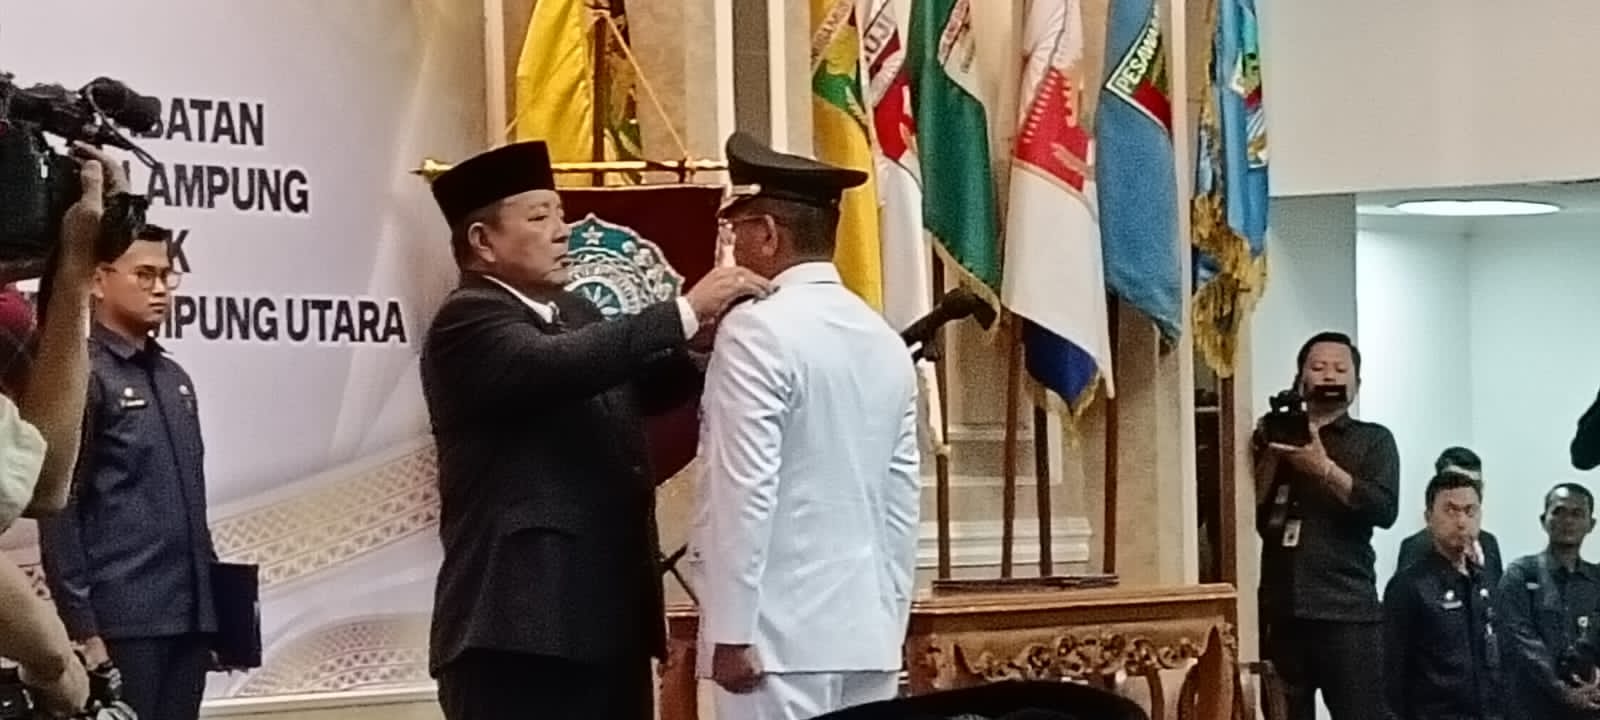 Gubernur Lampung Resmi Melantik Aswarodi Sebagai PJ Bupati Lampung Utara